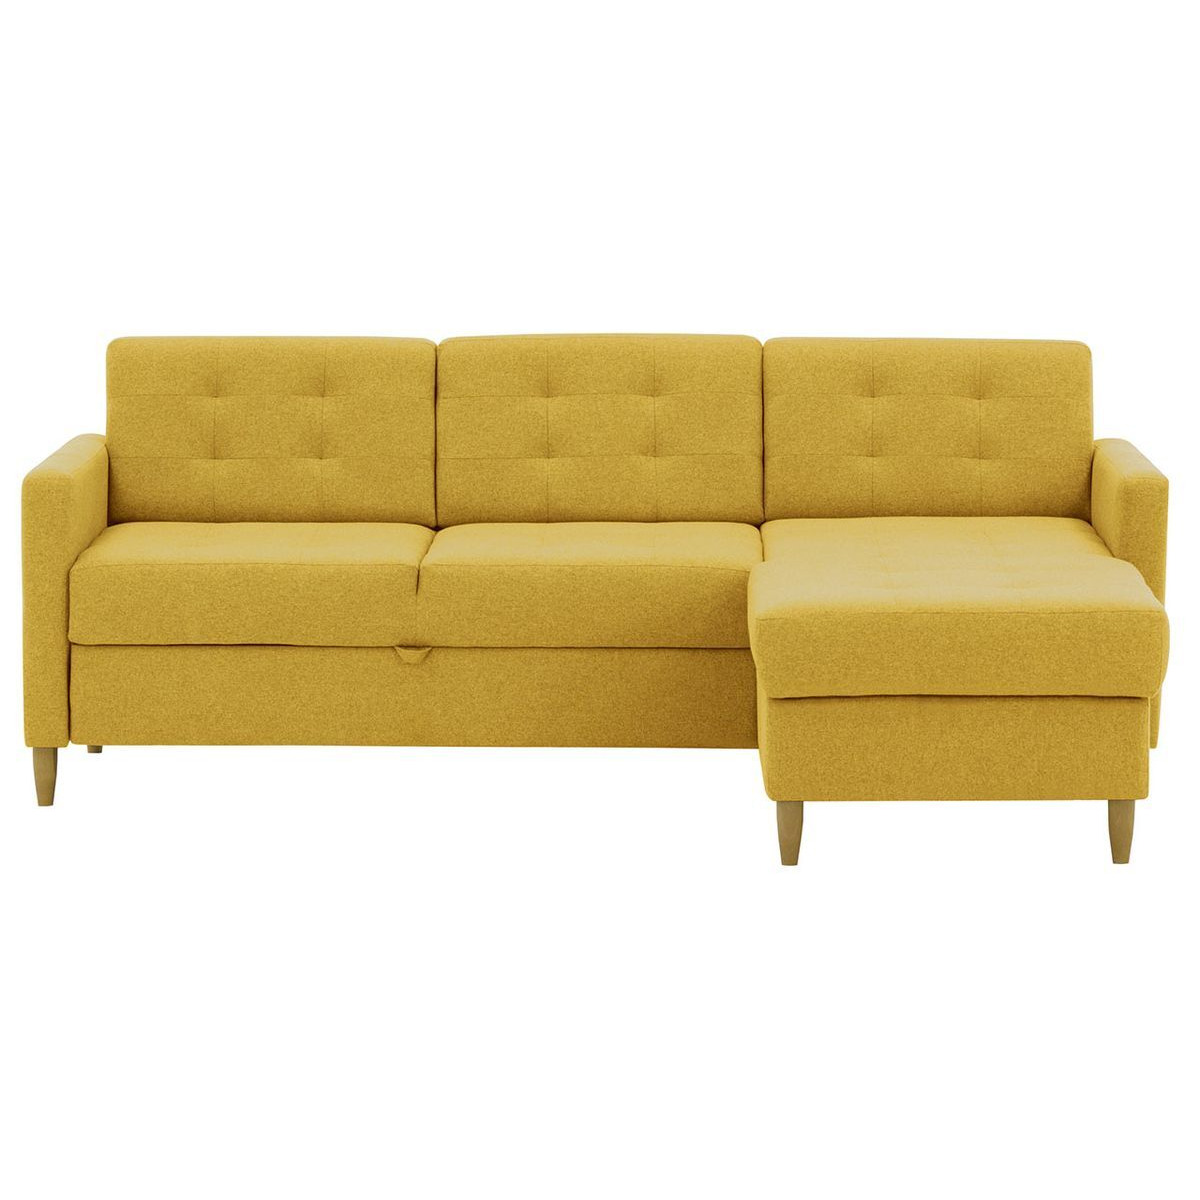 Explorer Corner Sofa Bed With Storage, yellow - image 1